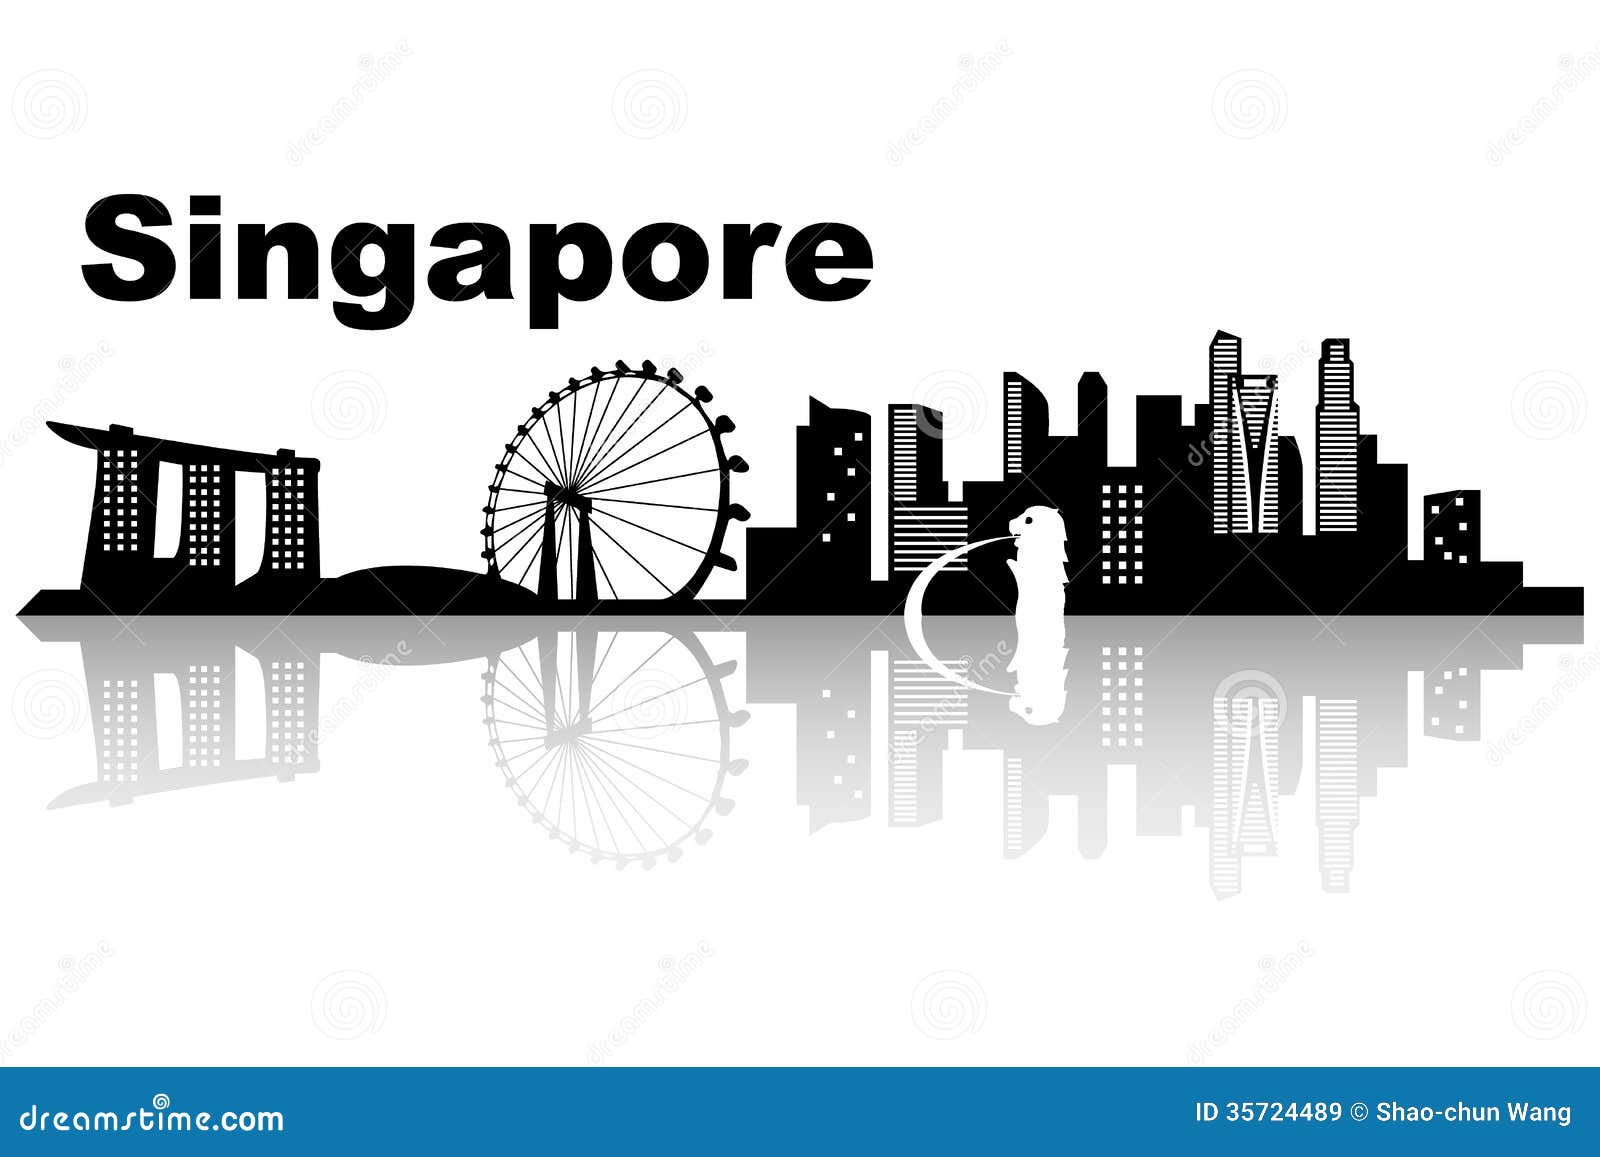 singapore skyline skyline